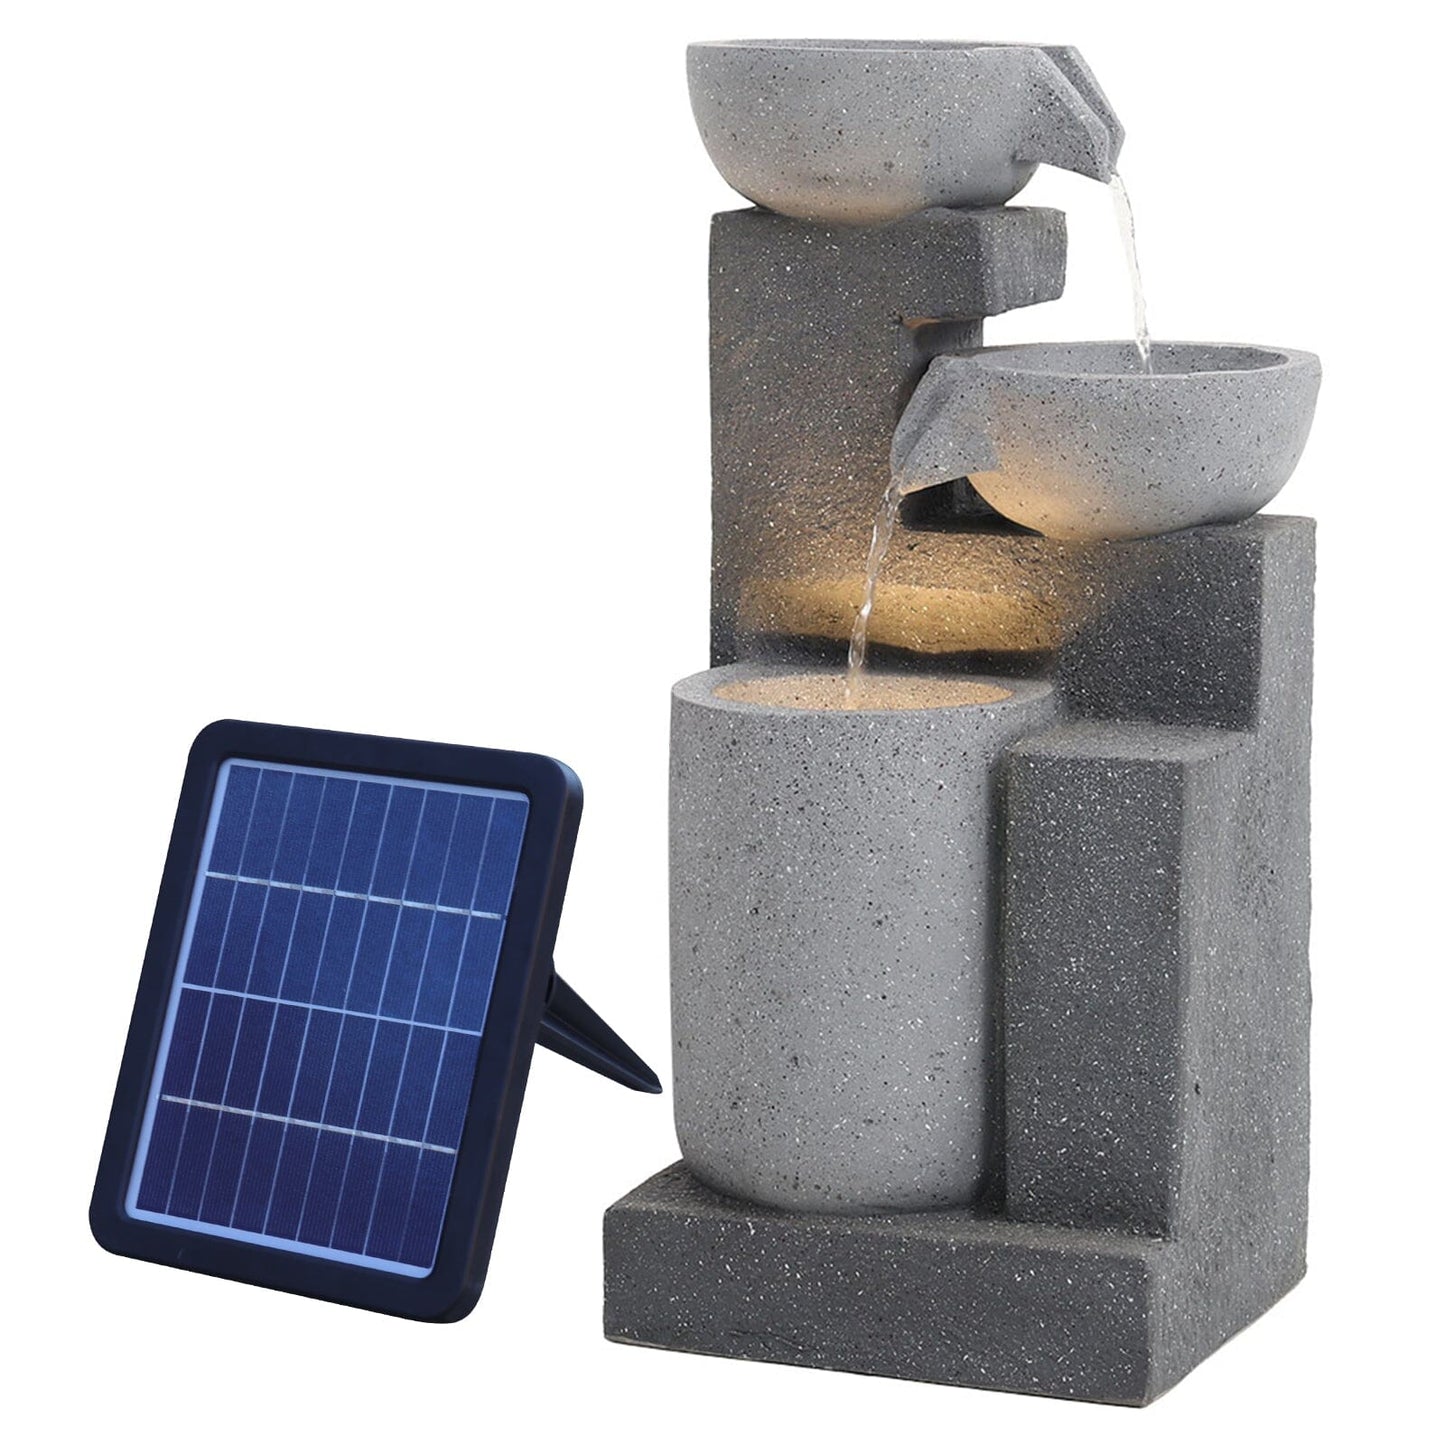 Garden Cascading Fountain Solar LED Light Rockfall Water Feature